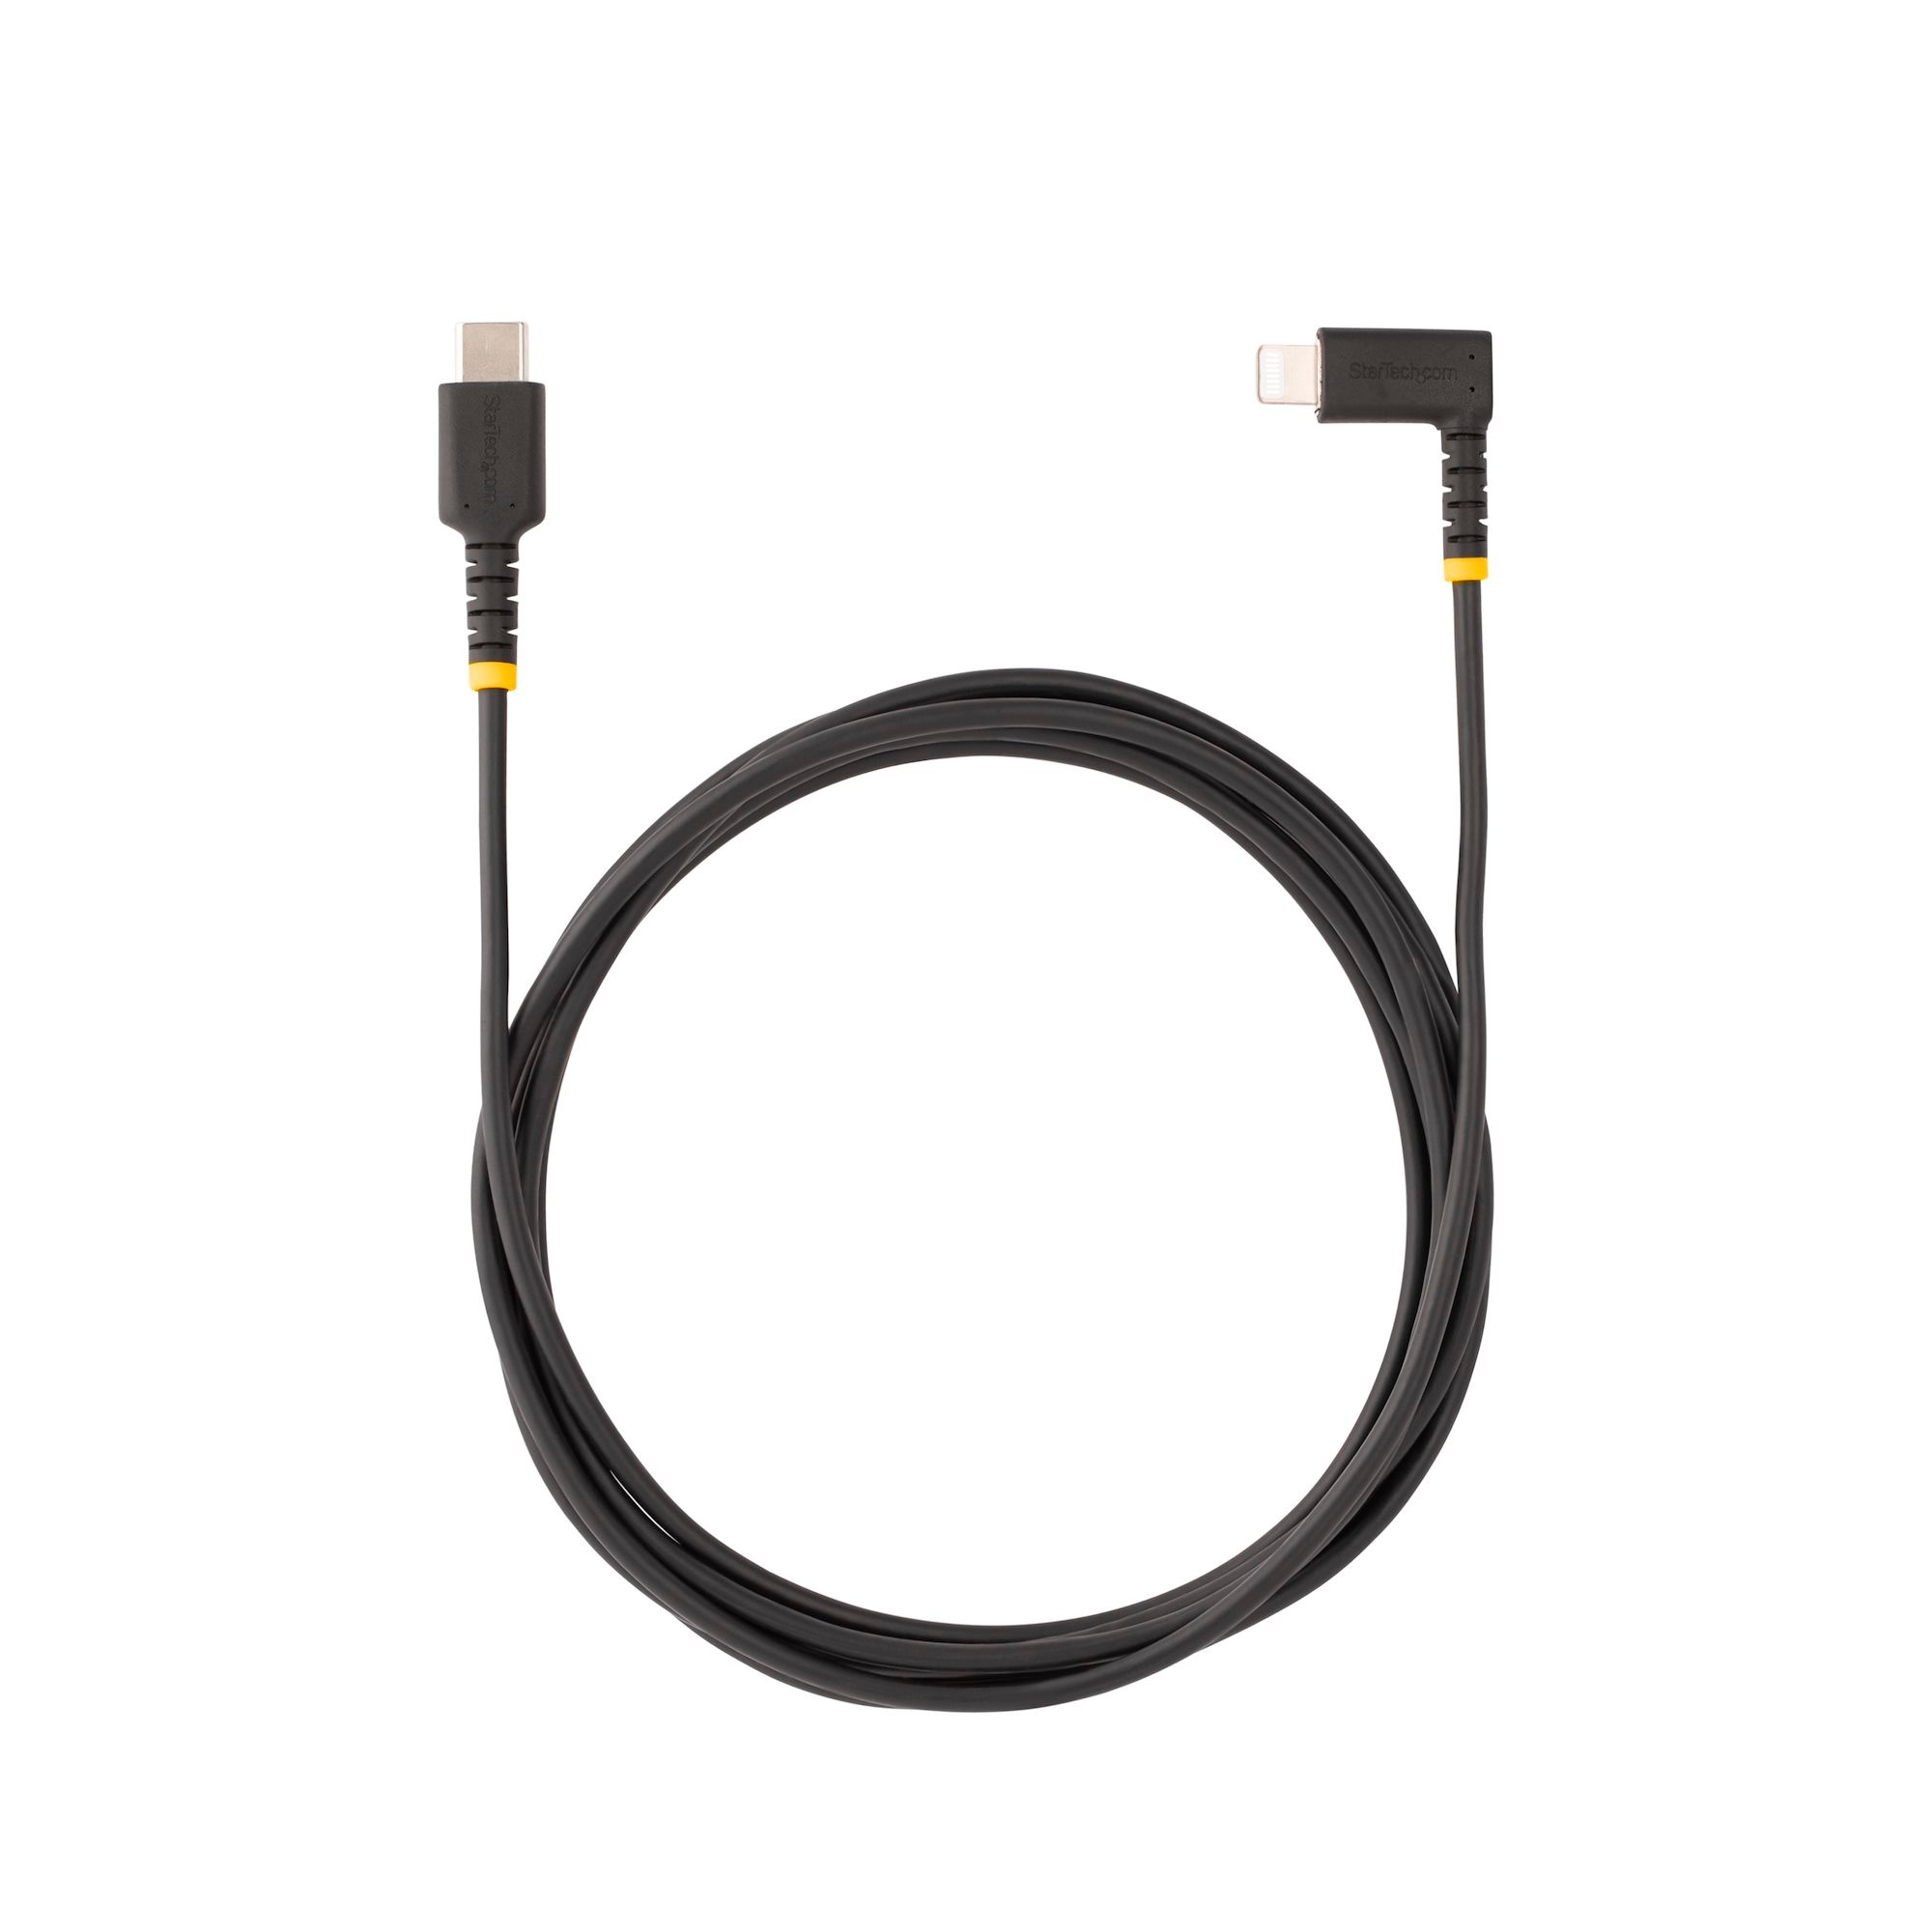 StarTech.com USB C to Micro USB Cable 2m 6ft - USB-C to Micro USB